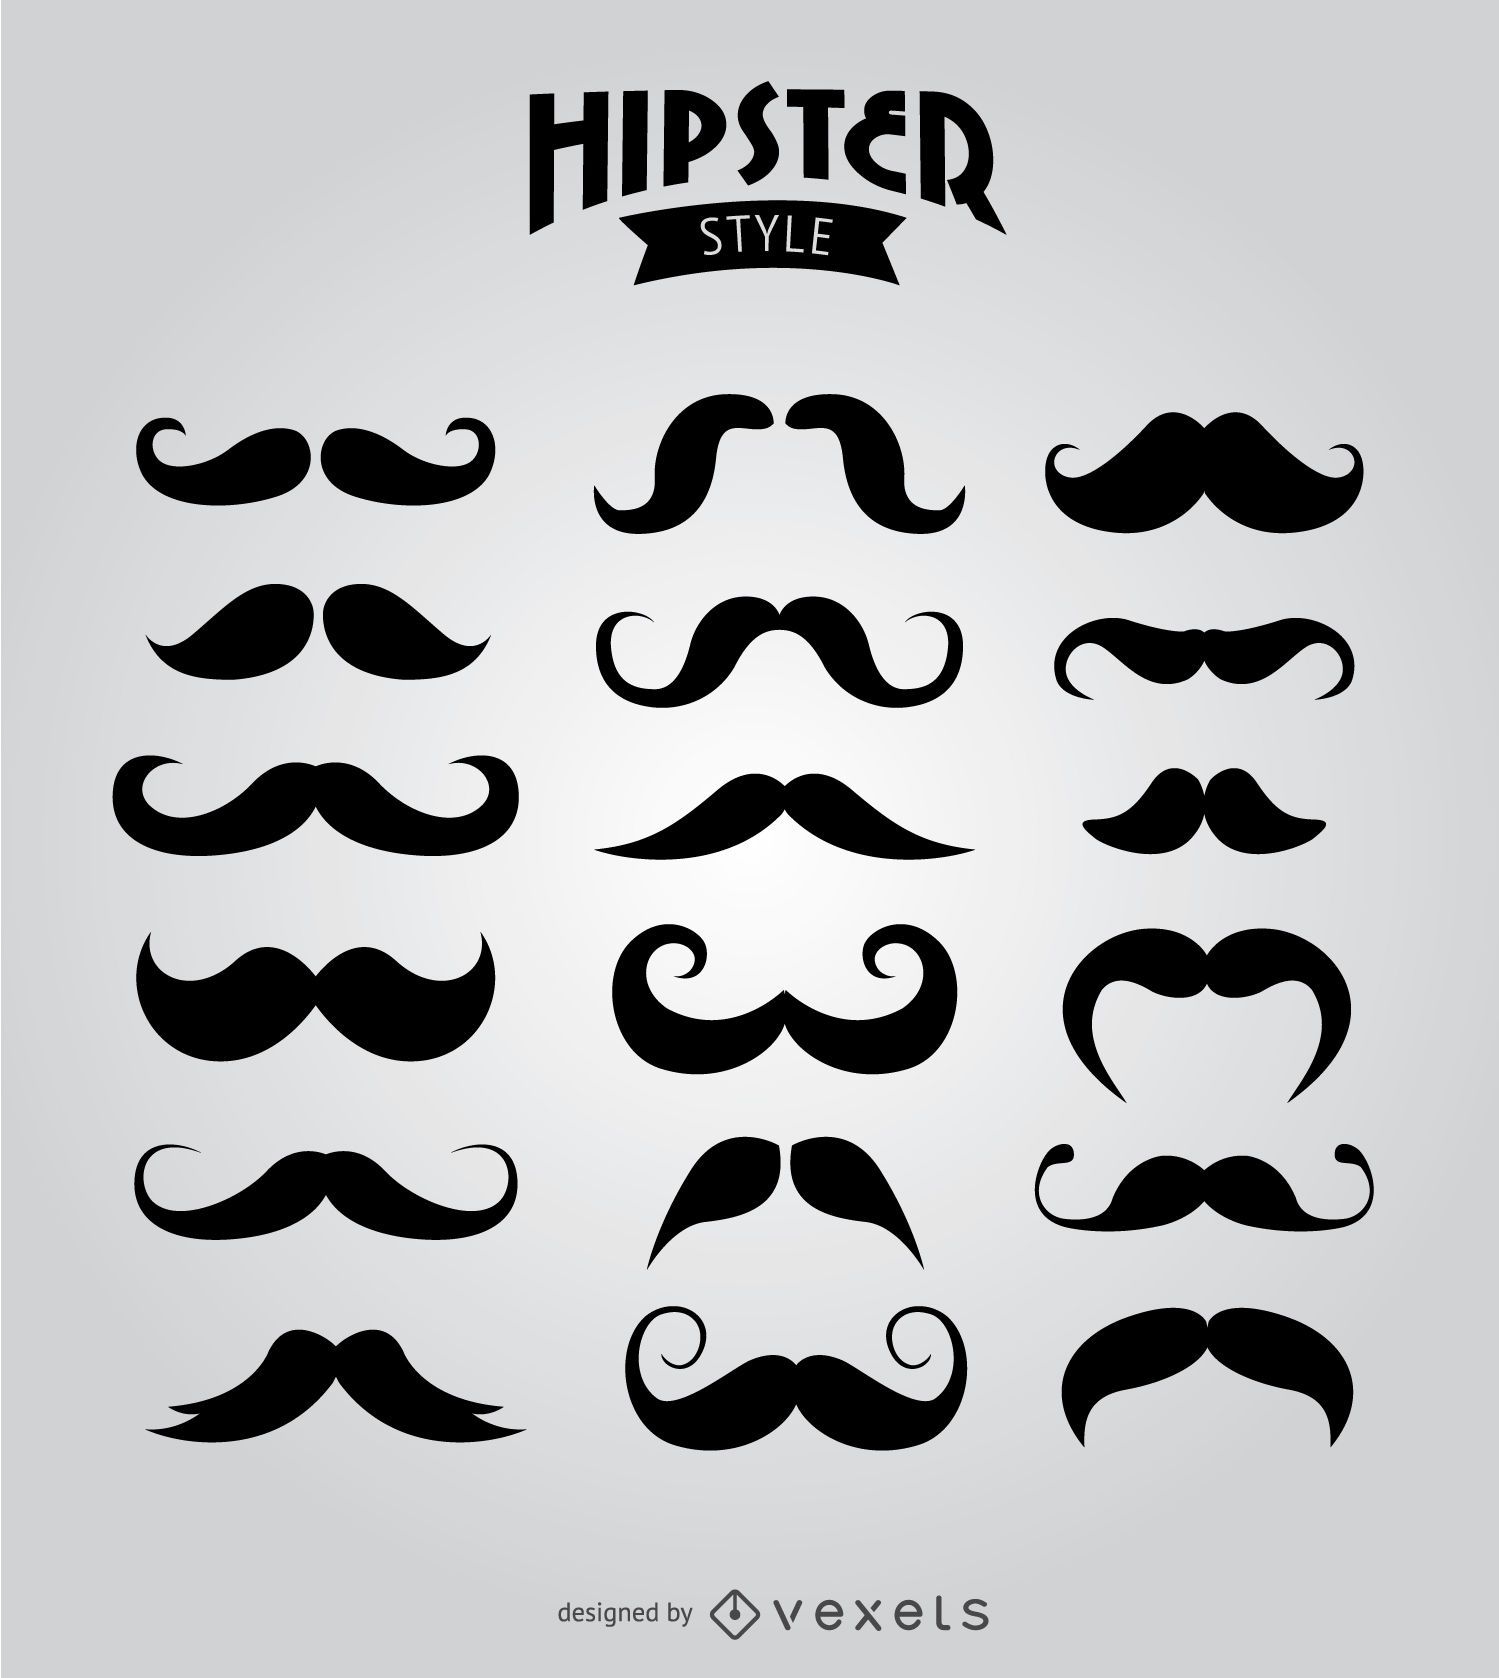 18 bigodes hipster